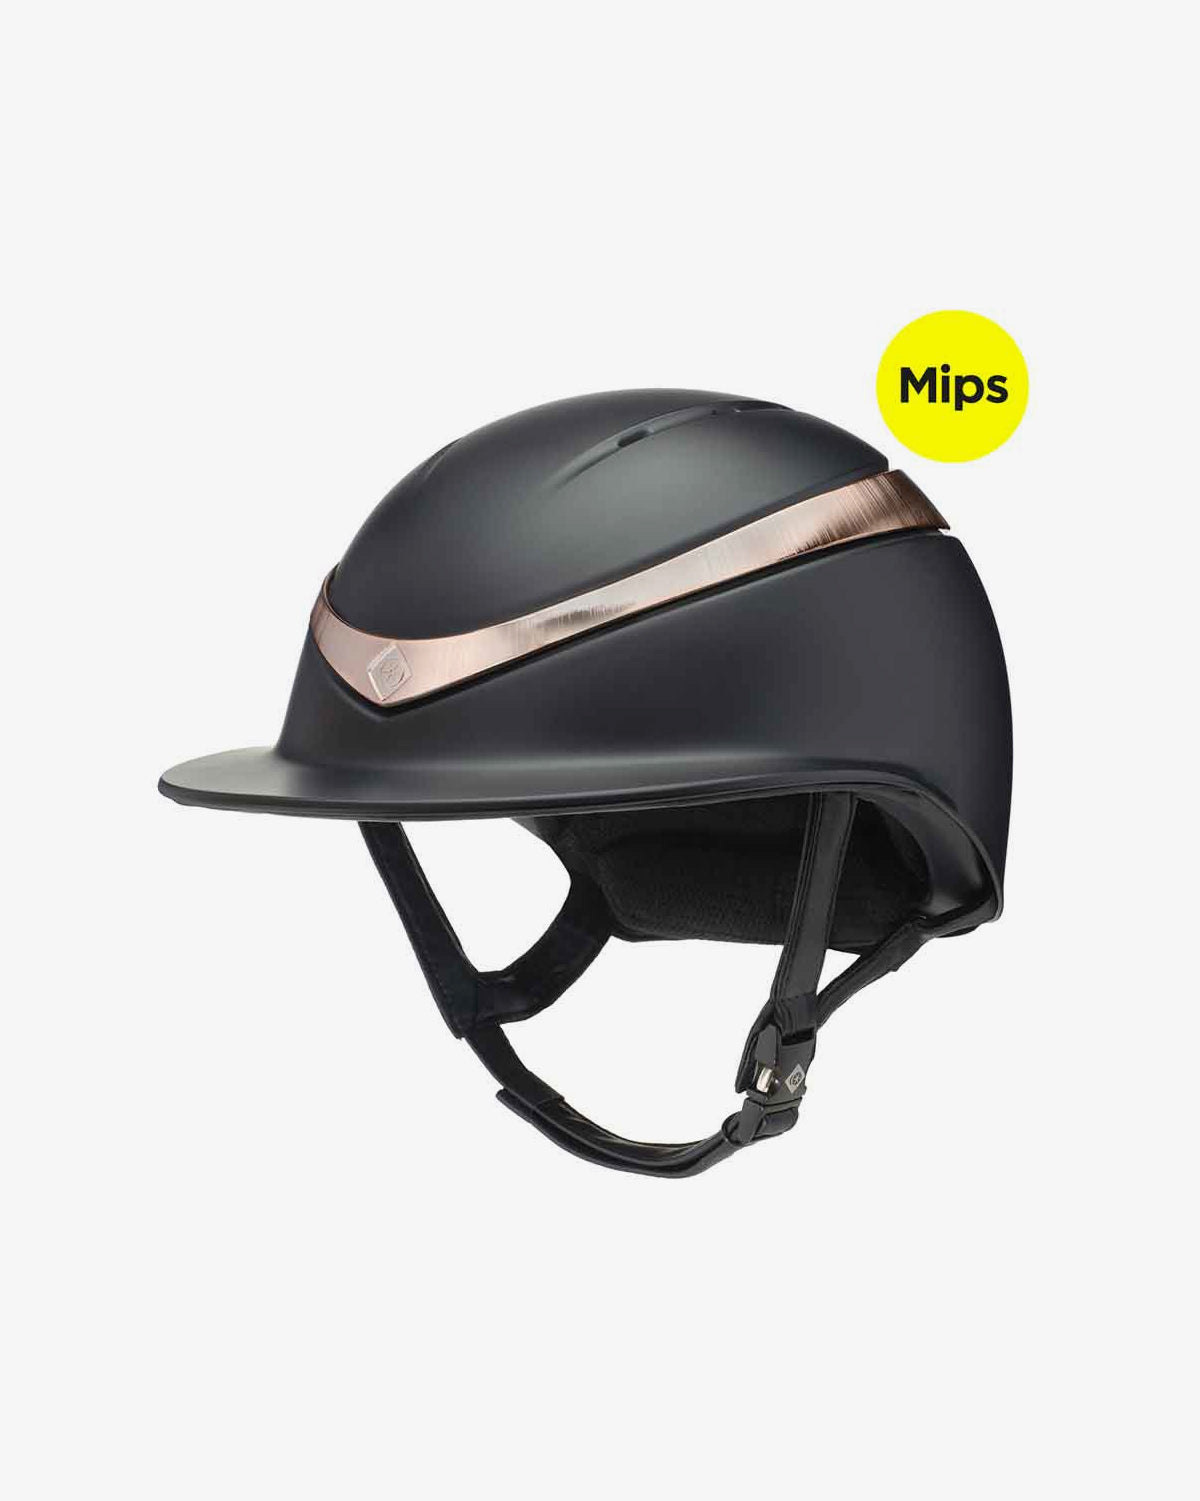 Halo Helmet with MIPS